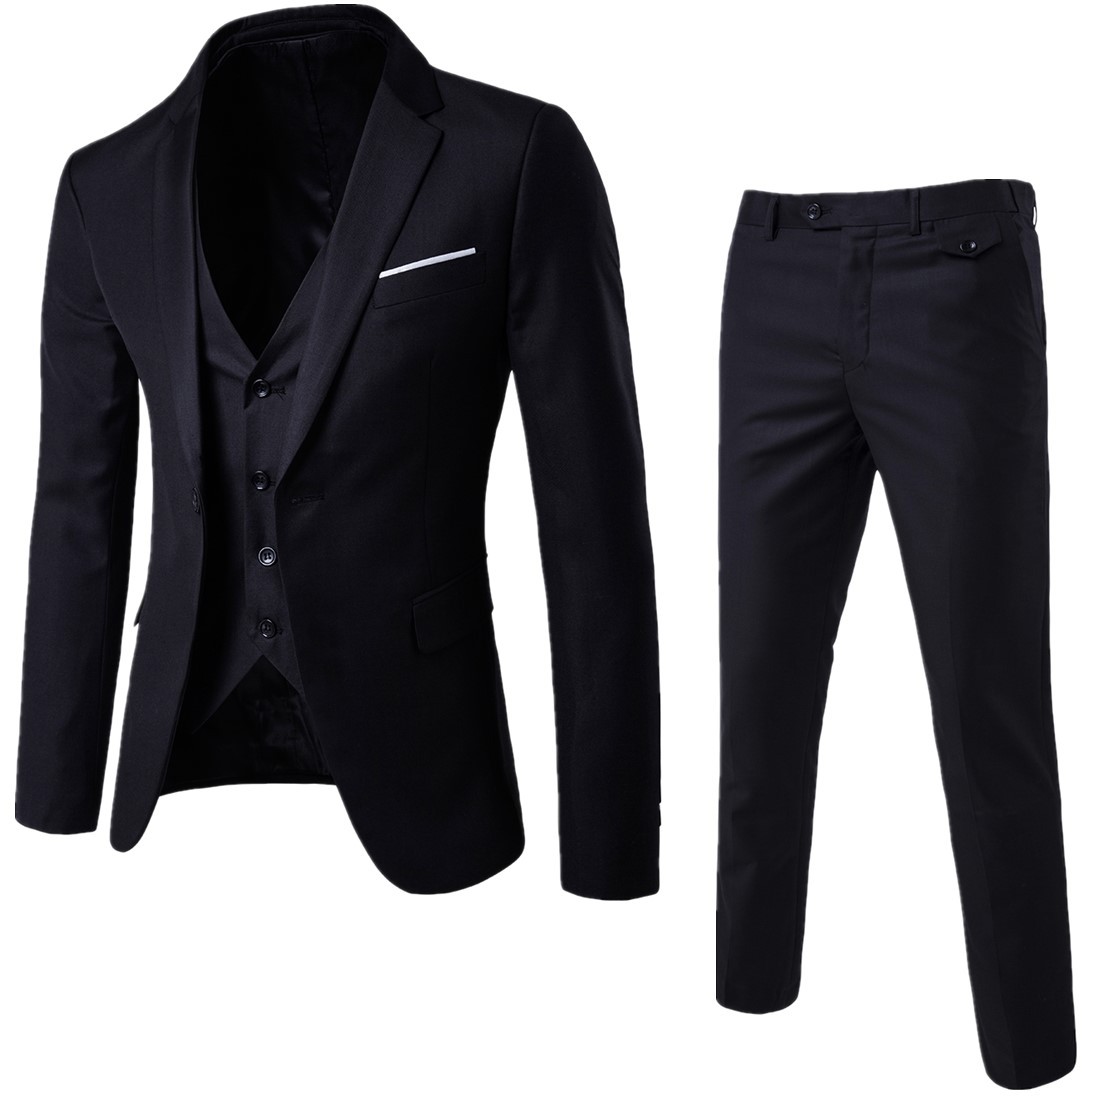 Men's 3-piece spring casual suit